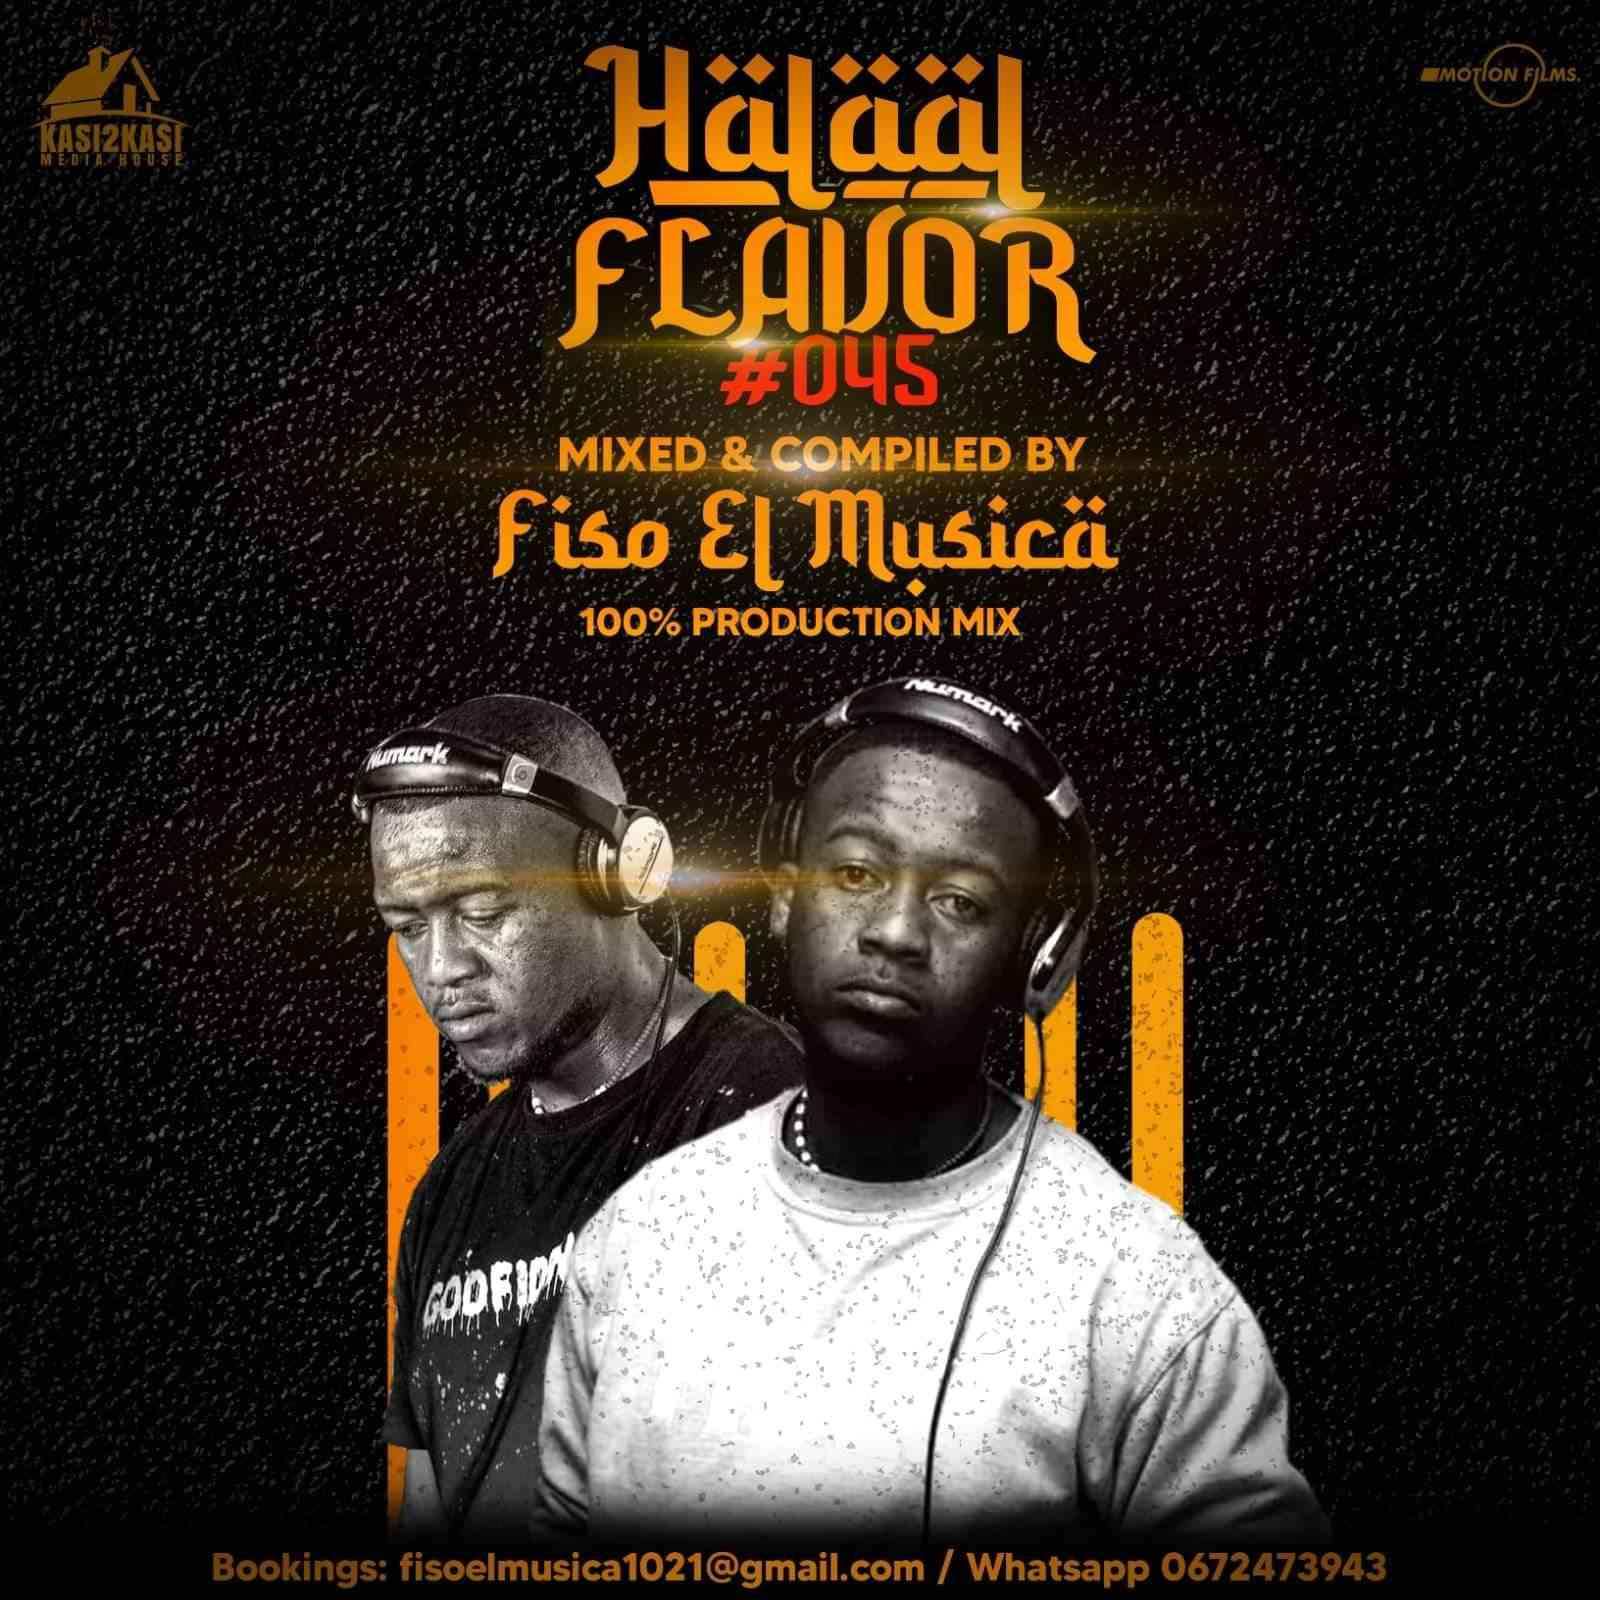 Fiso El Musica Halaal Flavour #045 Mix (100% Production Mix)